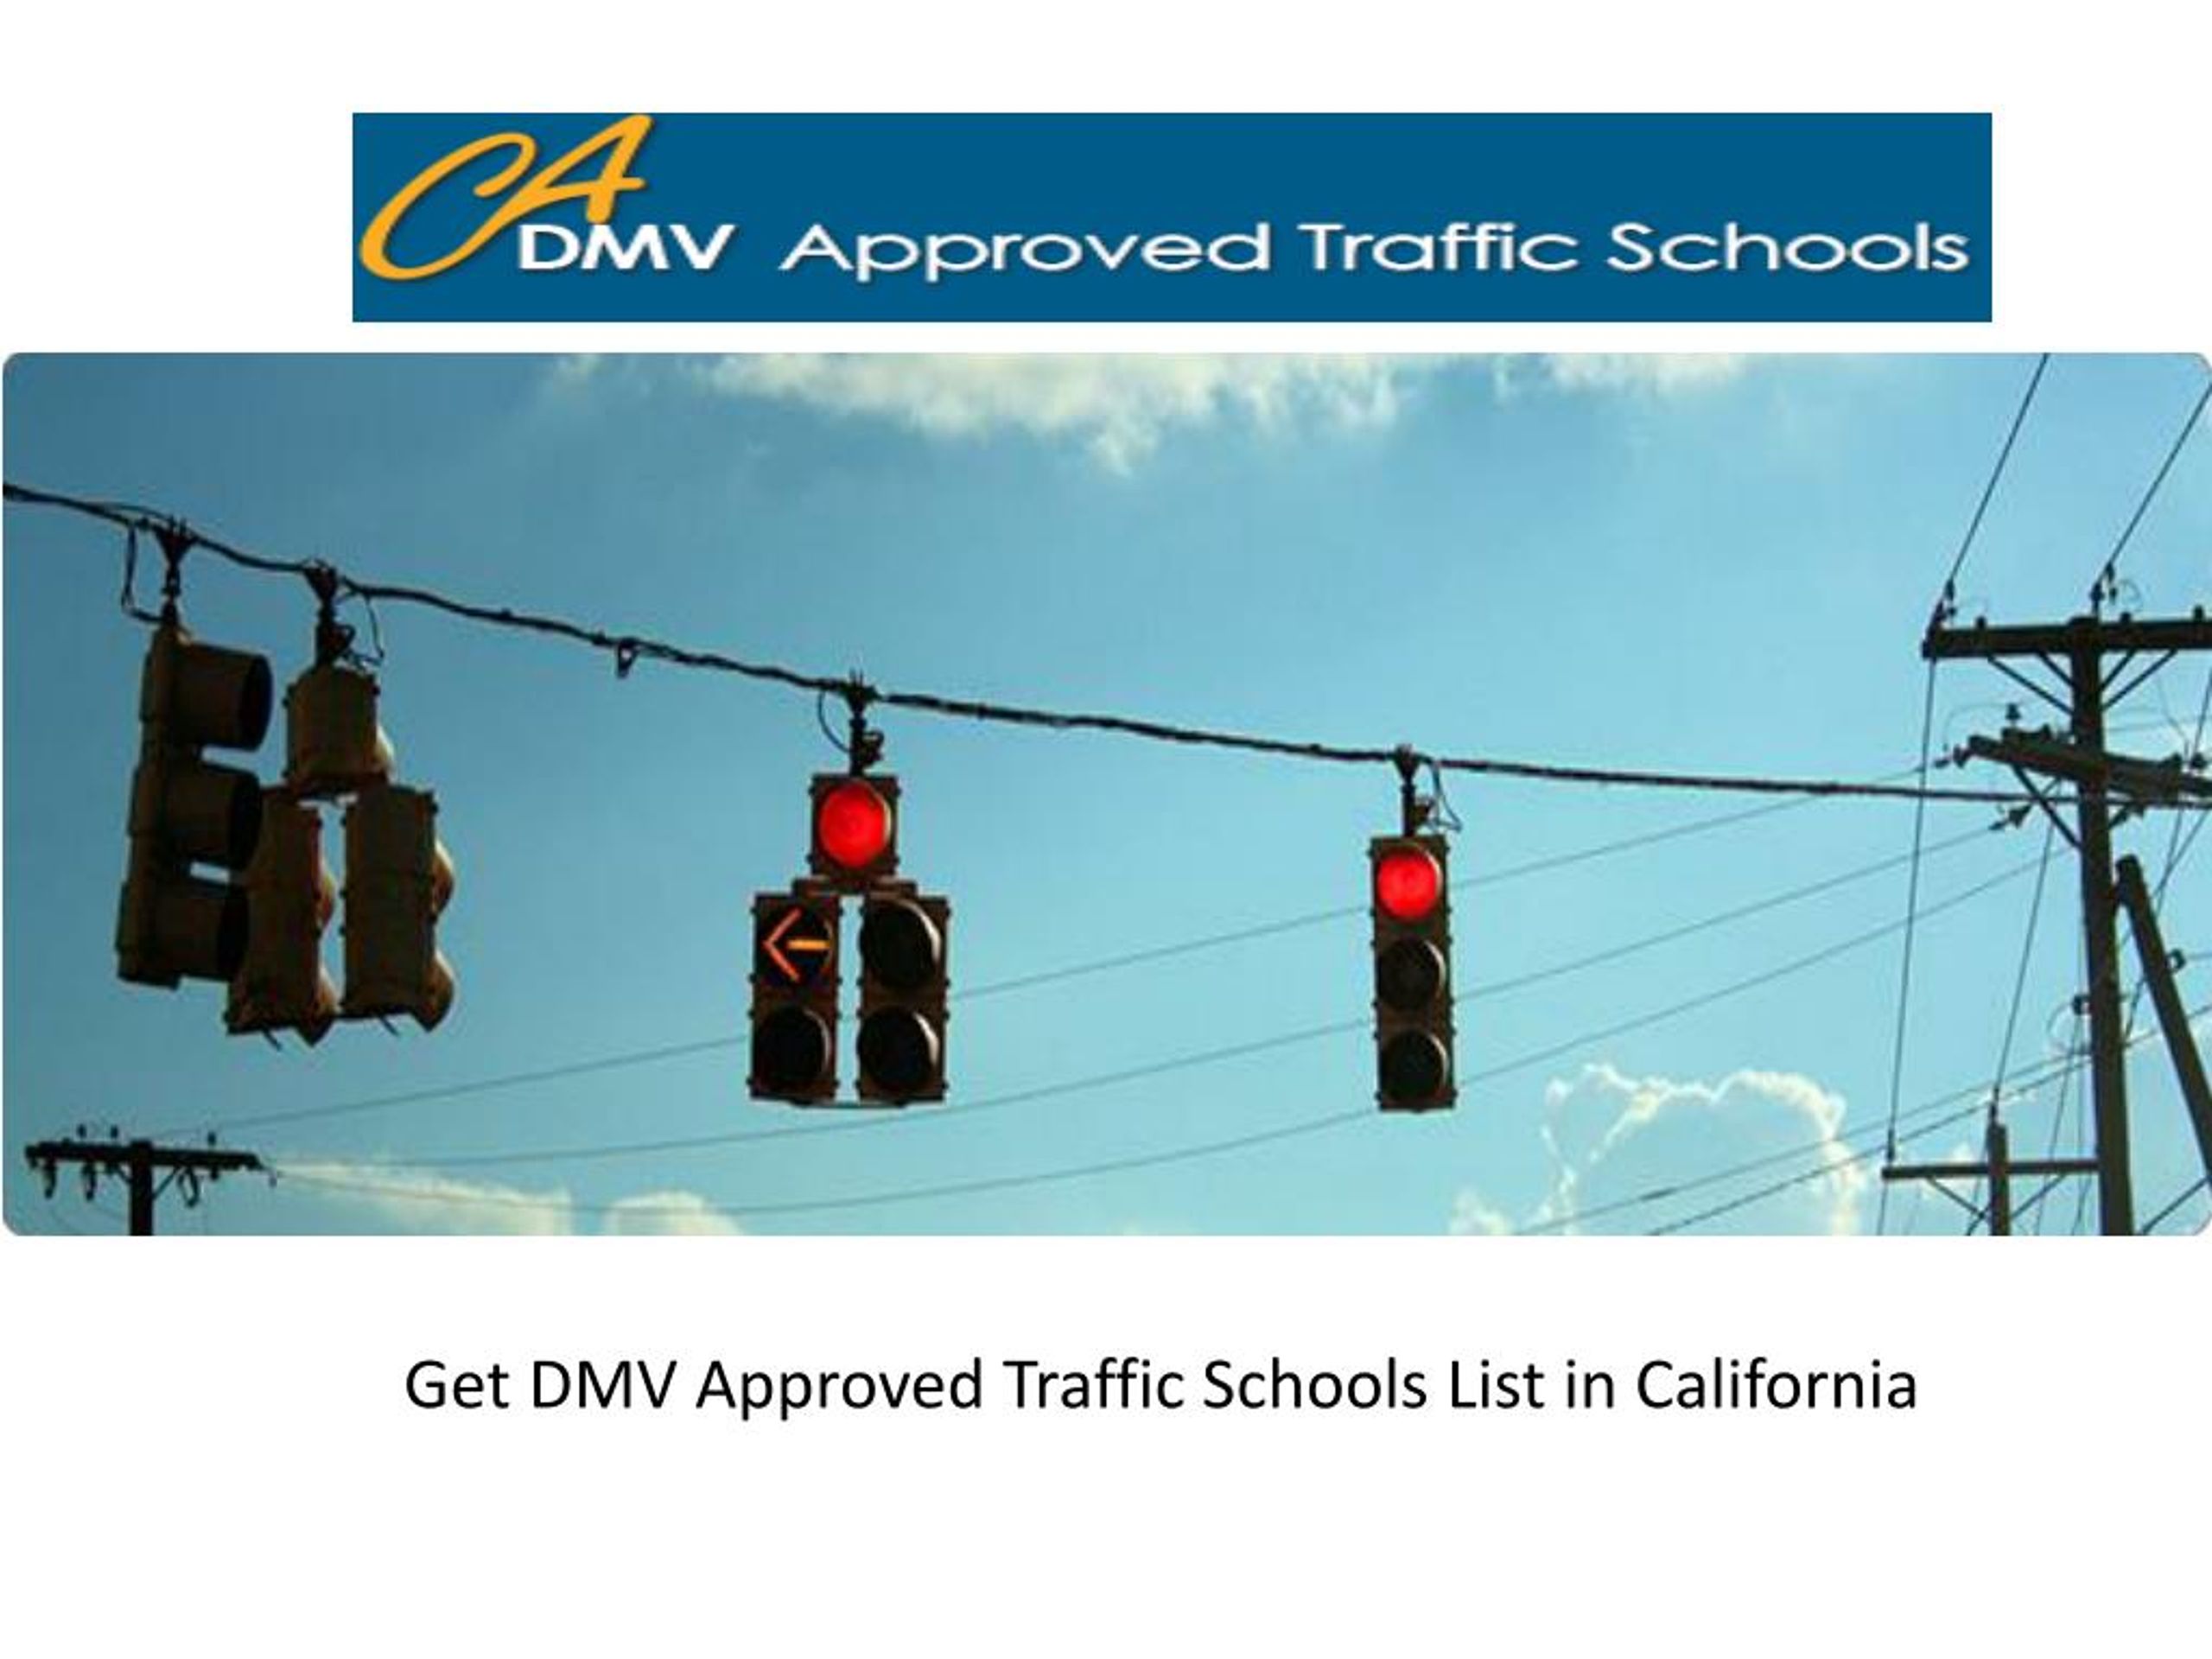 ca dmv approved traffic schools